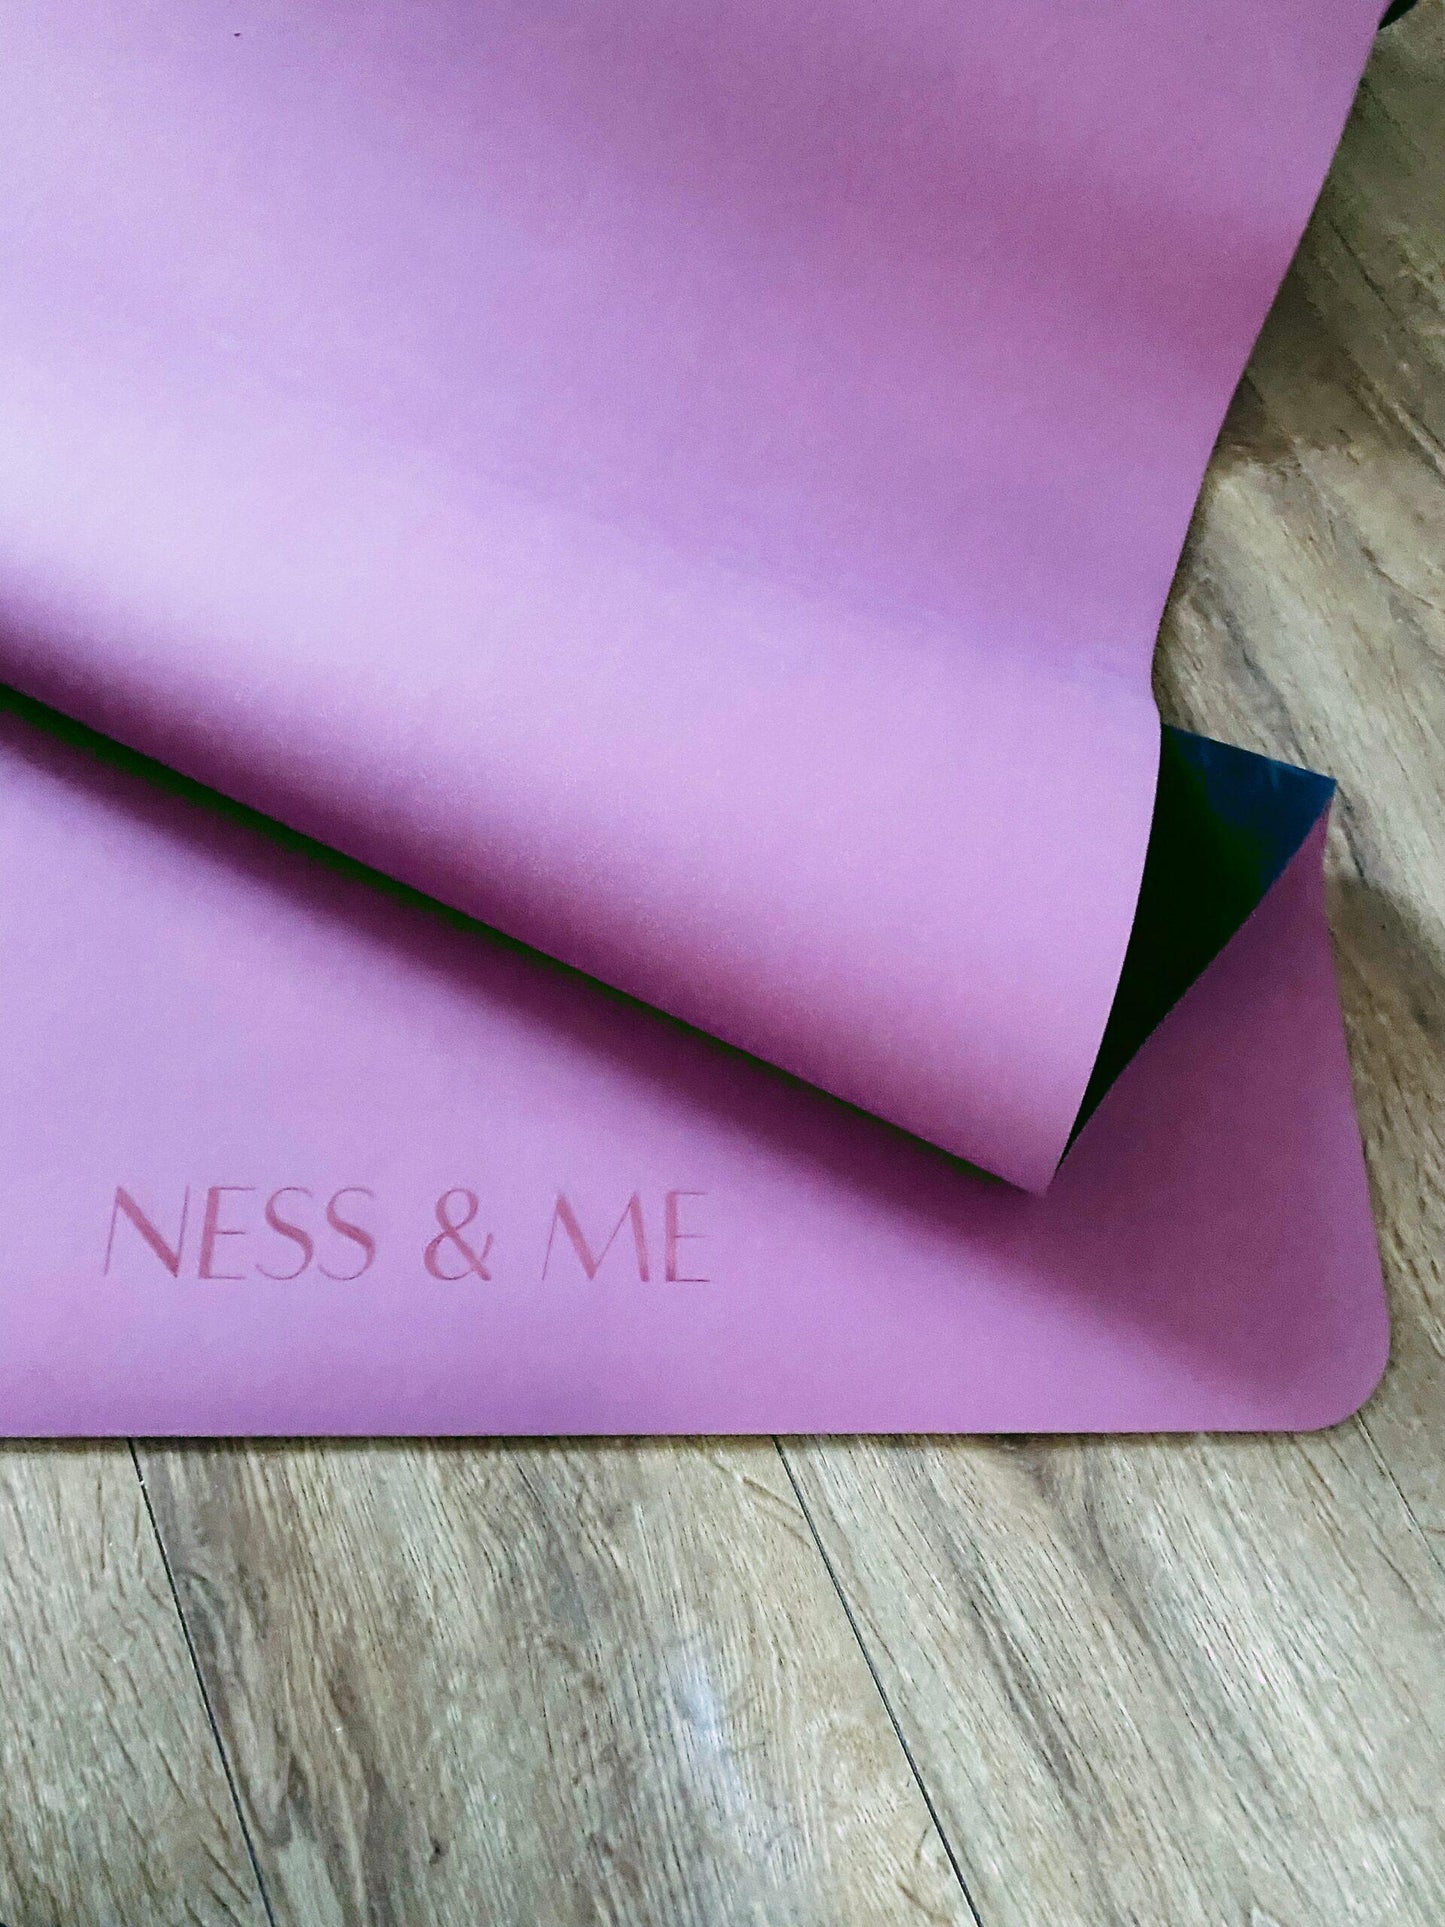 Ness & Me PU Yoga Mat 4mm - Deep Pink (+ Free Carry Strap)